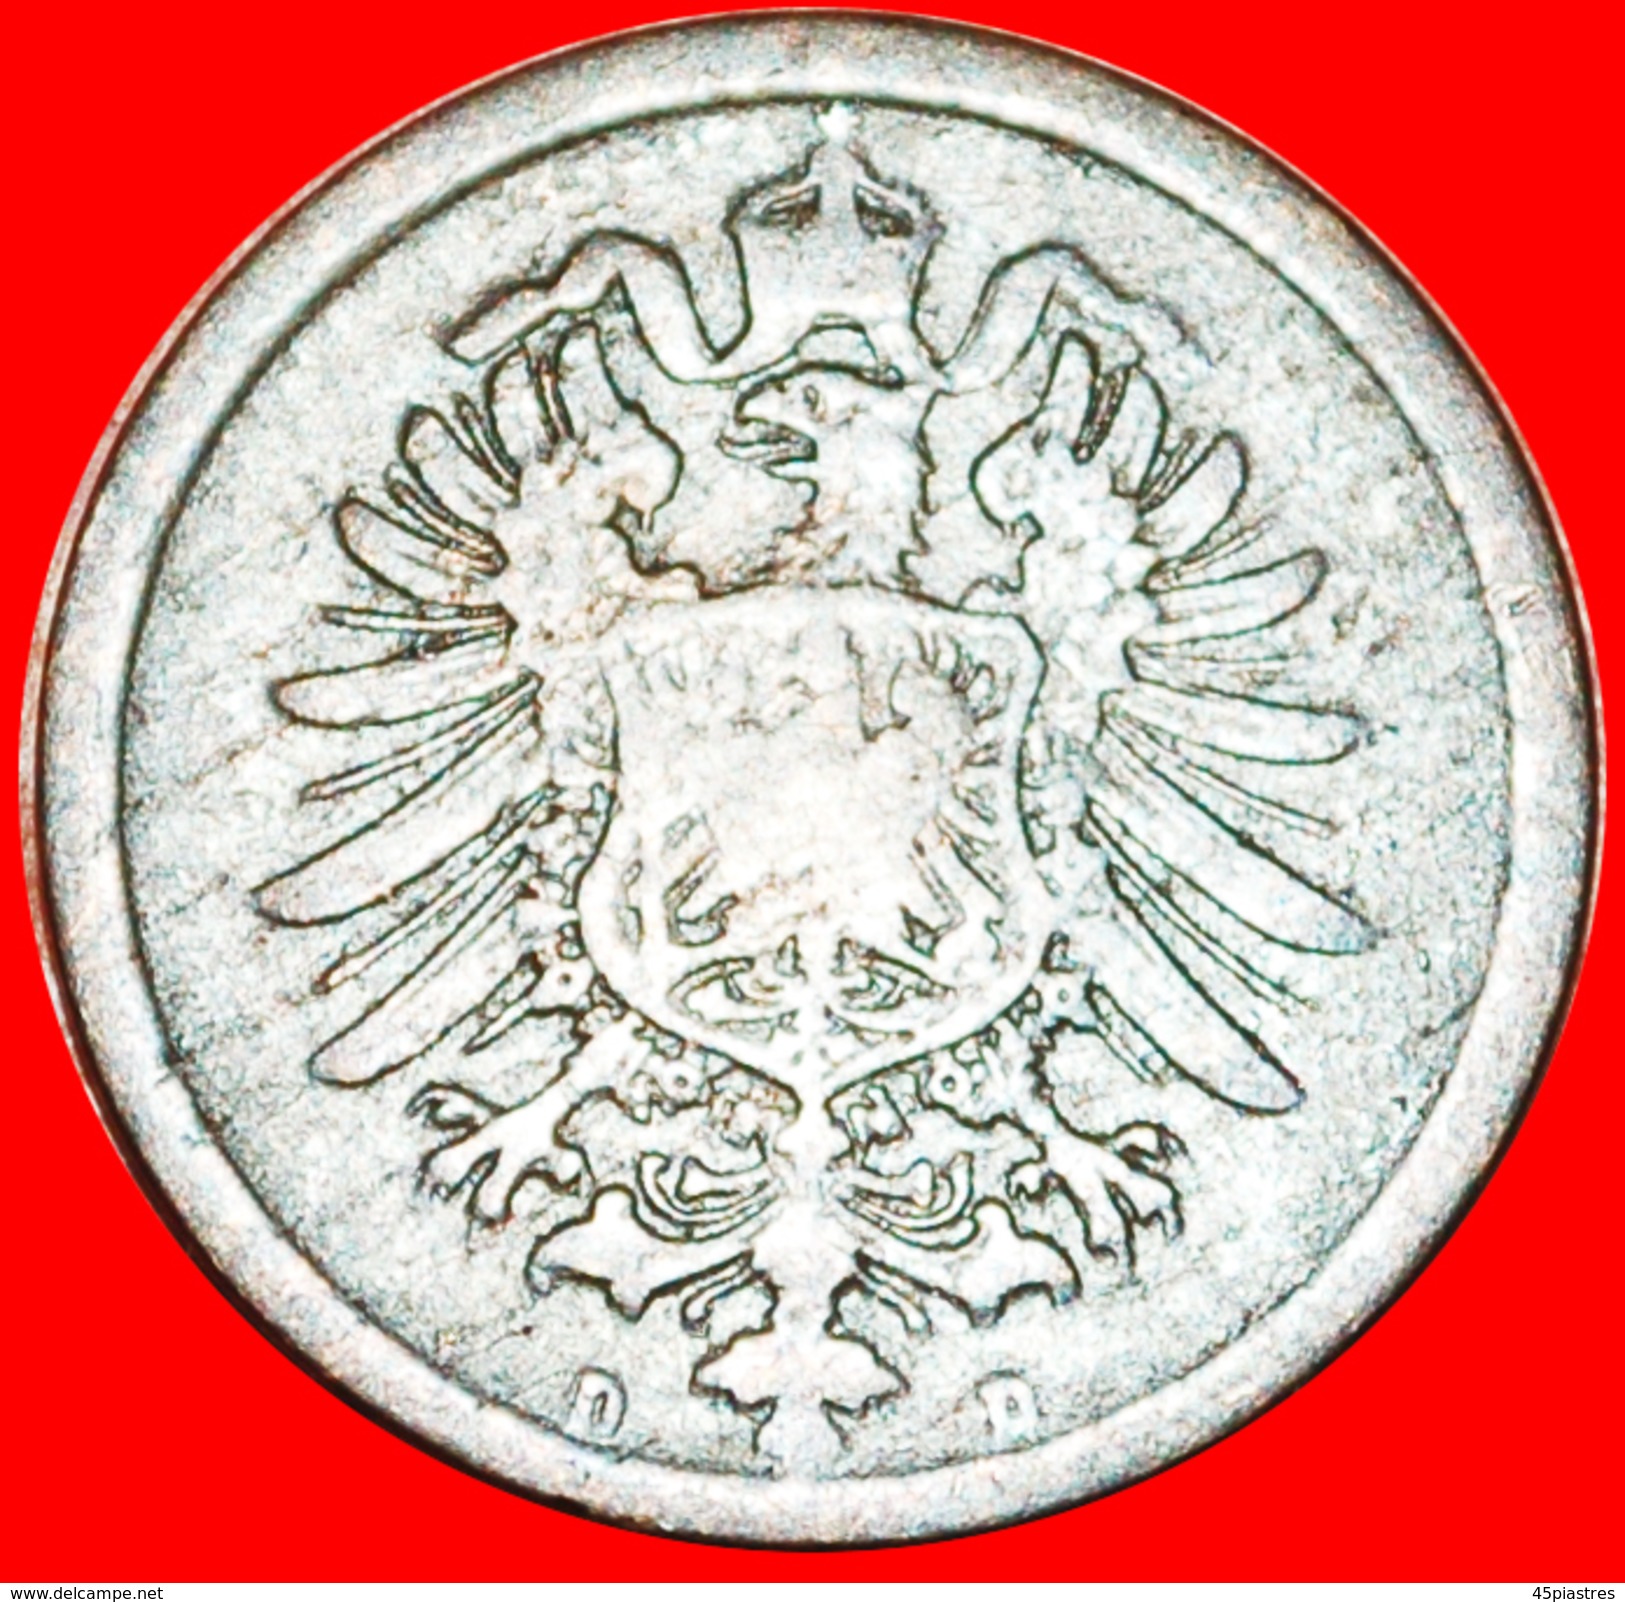 § EAGLE: GERMANY &#x2605; 2 PFENNIG 1876D! LOW START &#x2605; NO RESERVE! Wilhelm I (1871-1888) - 2 Pfennig